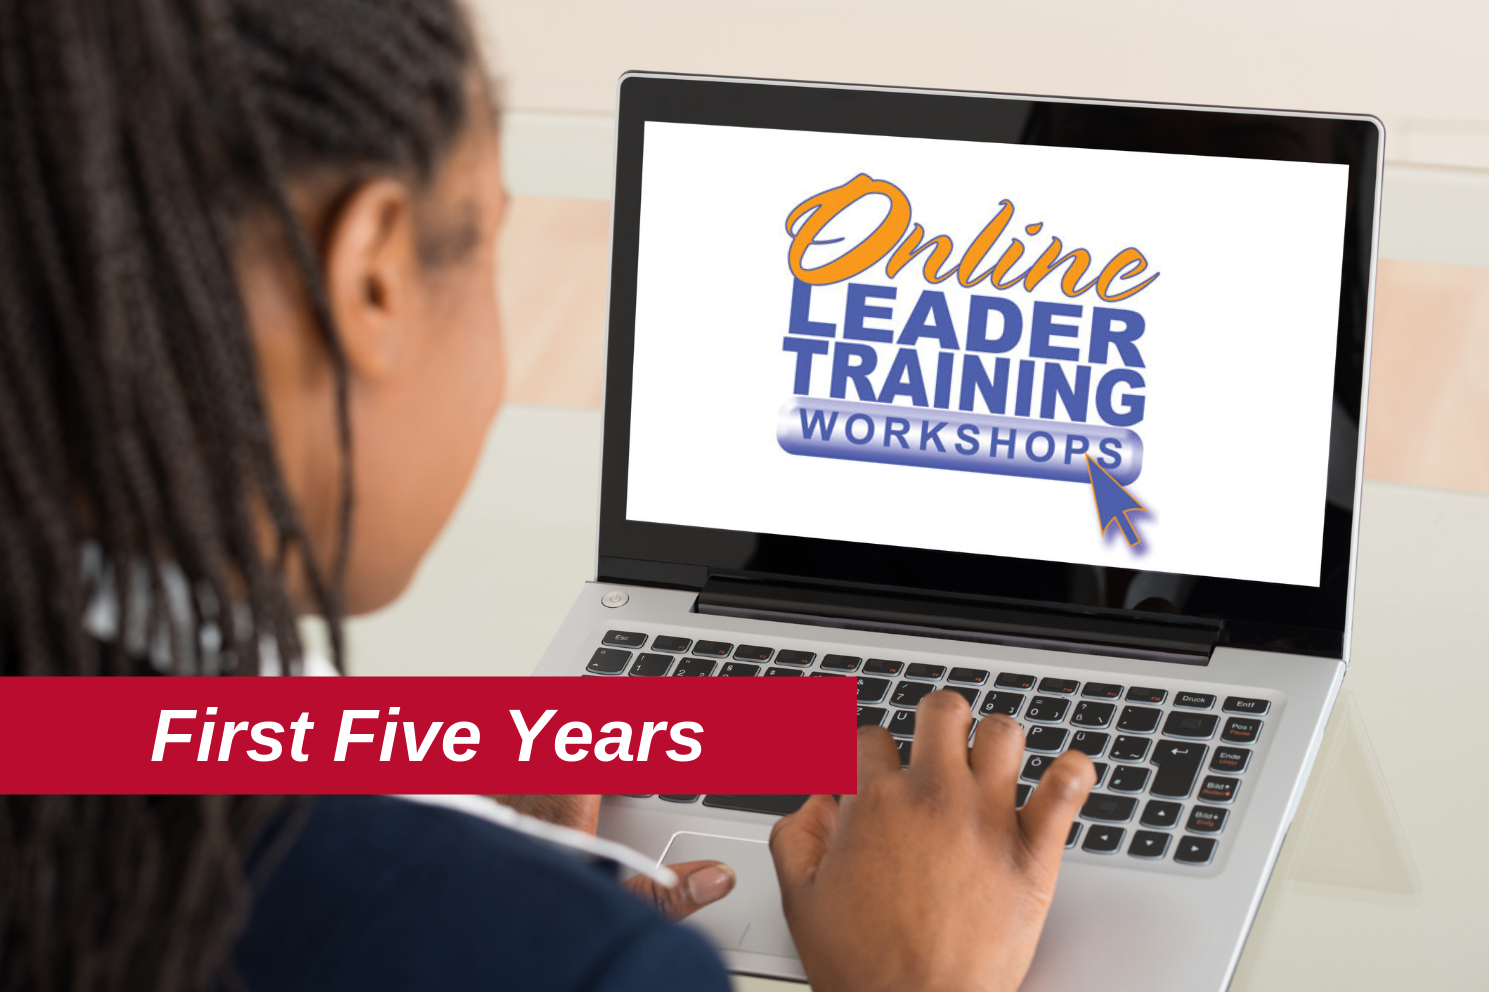 First Five Years Online Leader Training Workshop